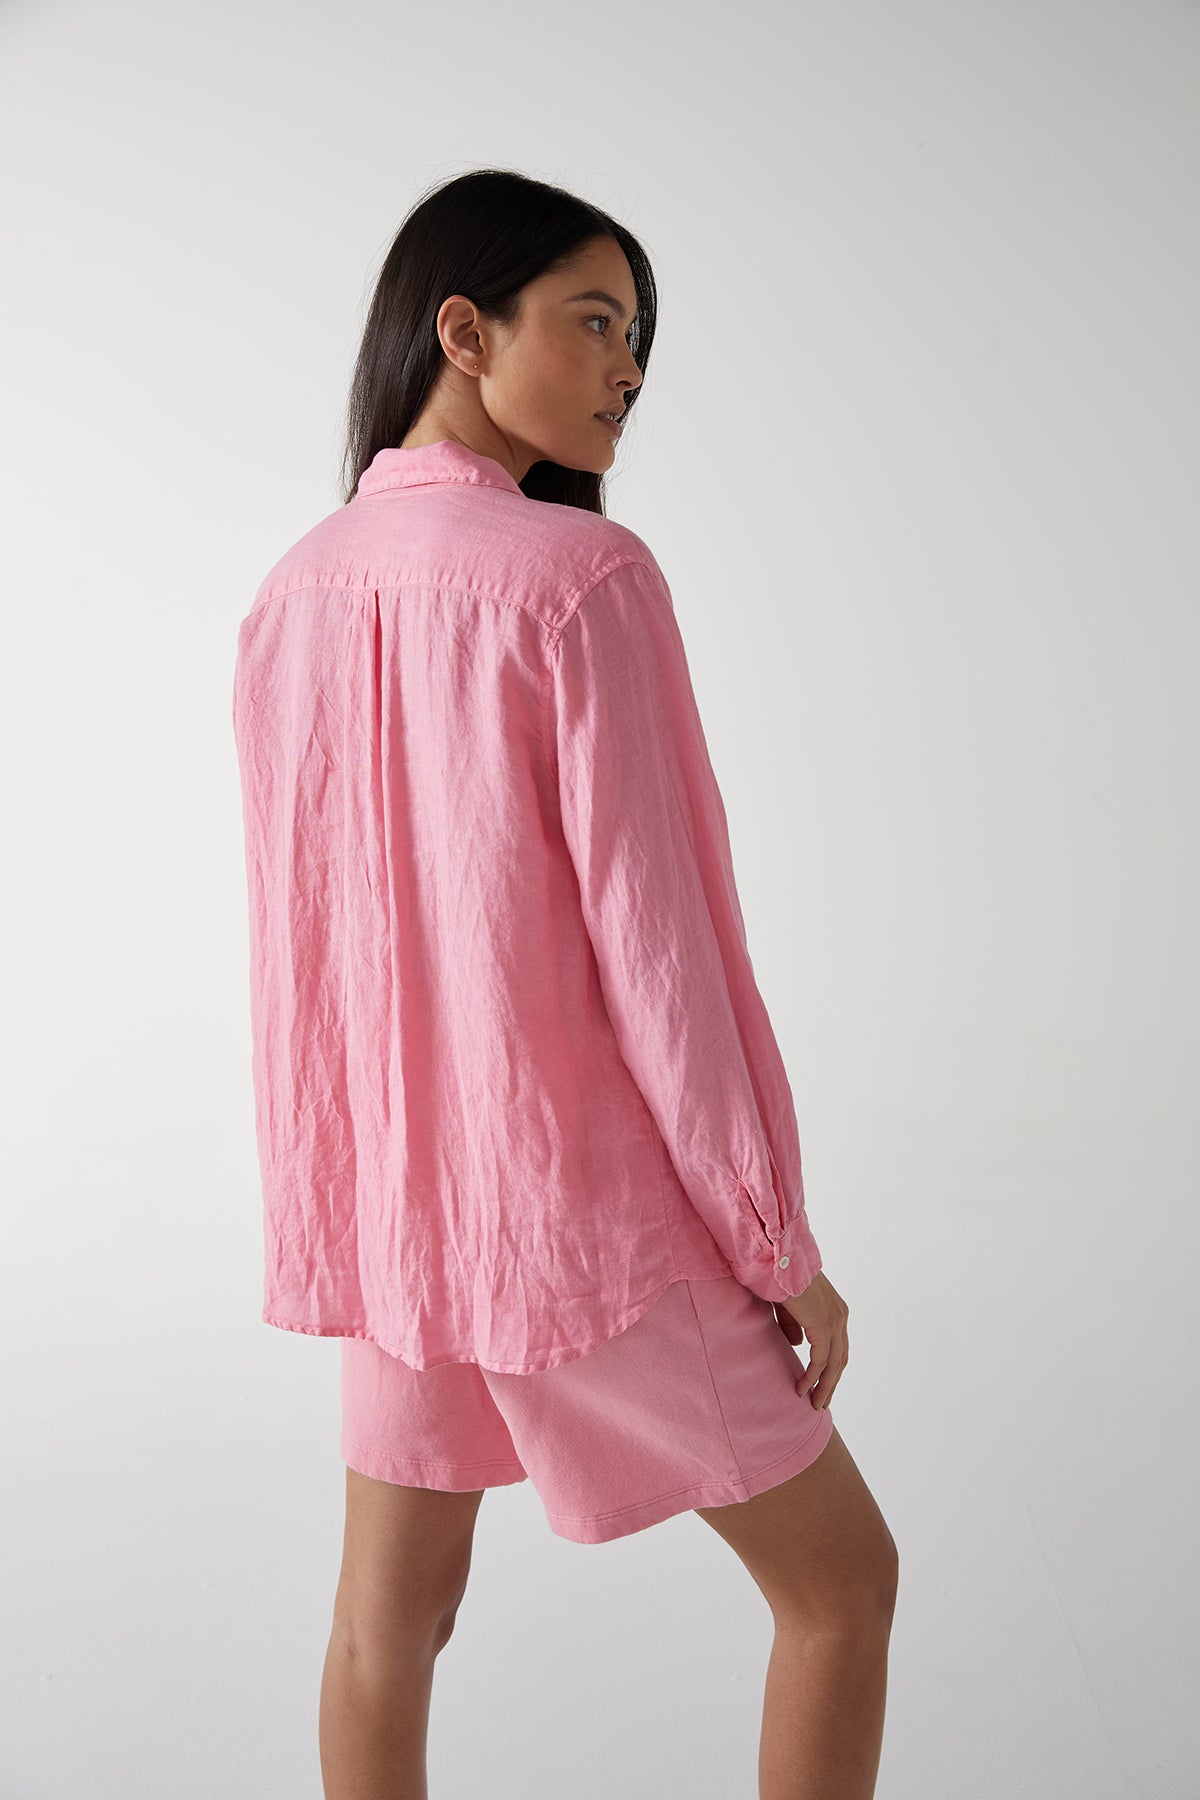 Mulholland shirt in cupid pink back & side-24527796830401